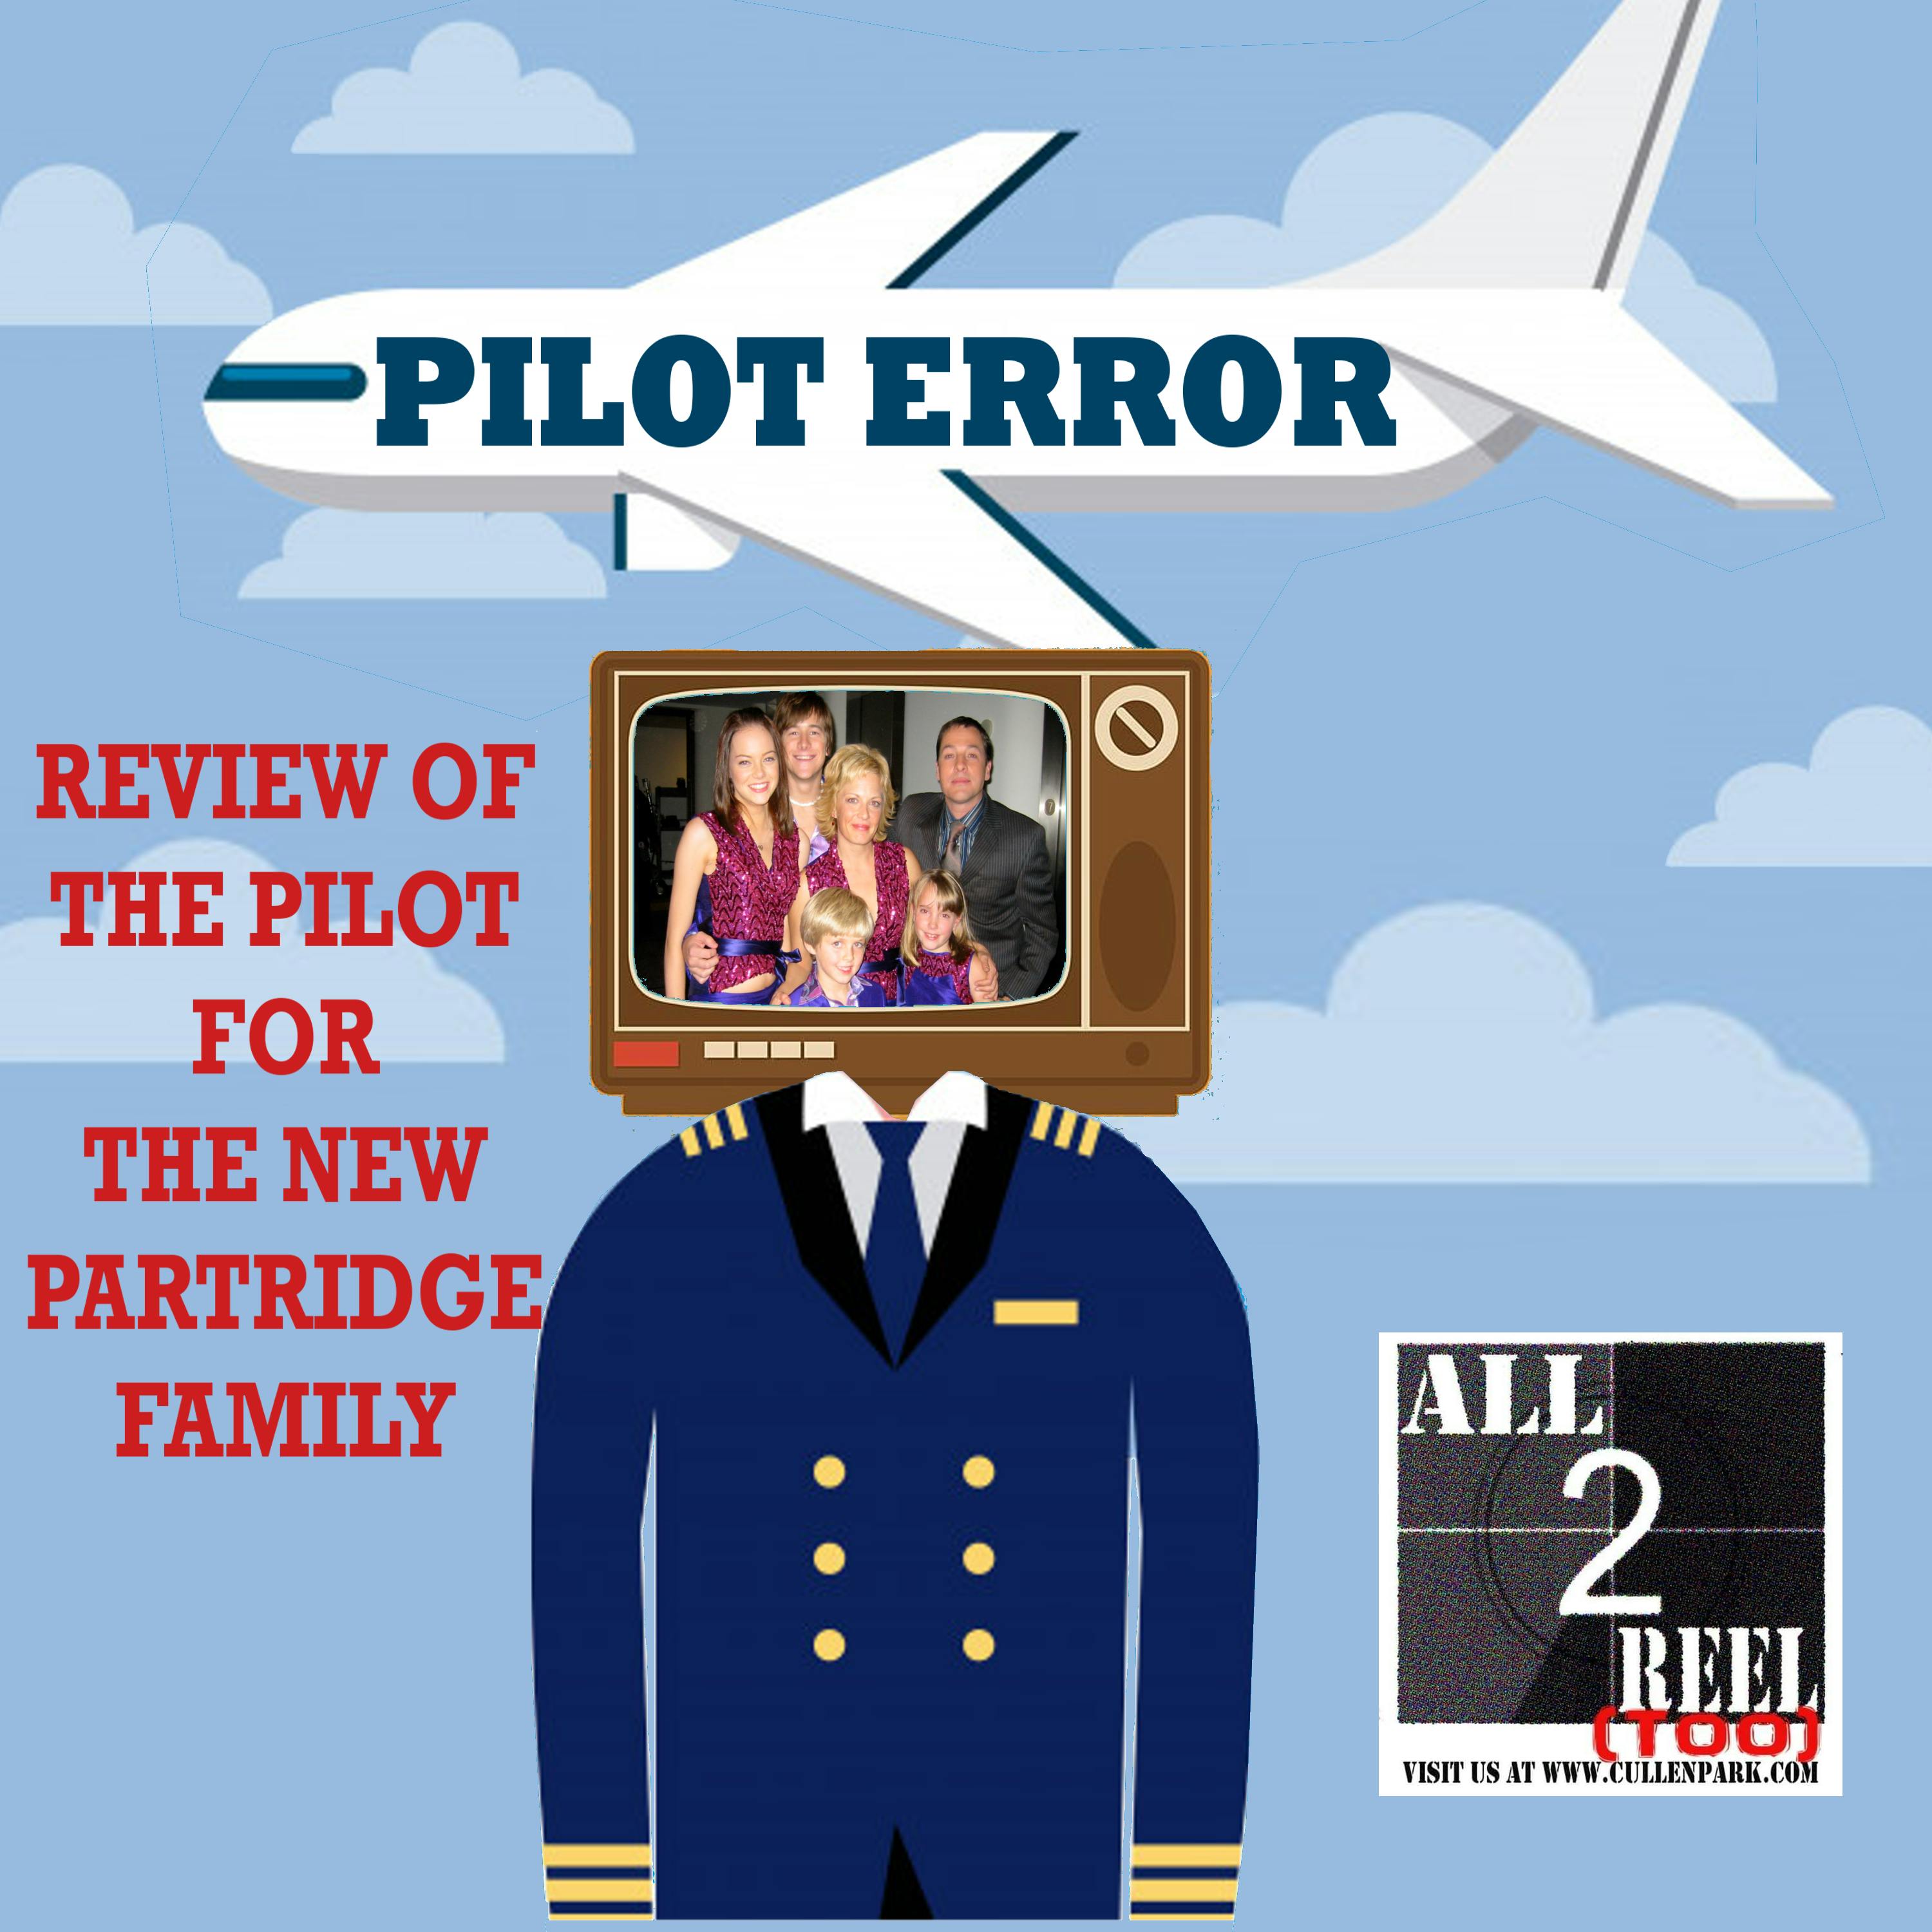 The New Partridge Family  - PILOT ERROR REVIEW Image